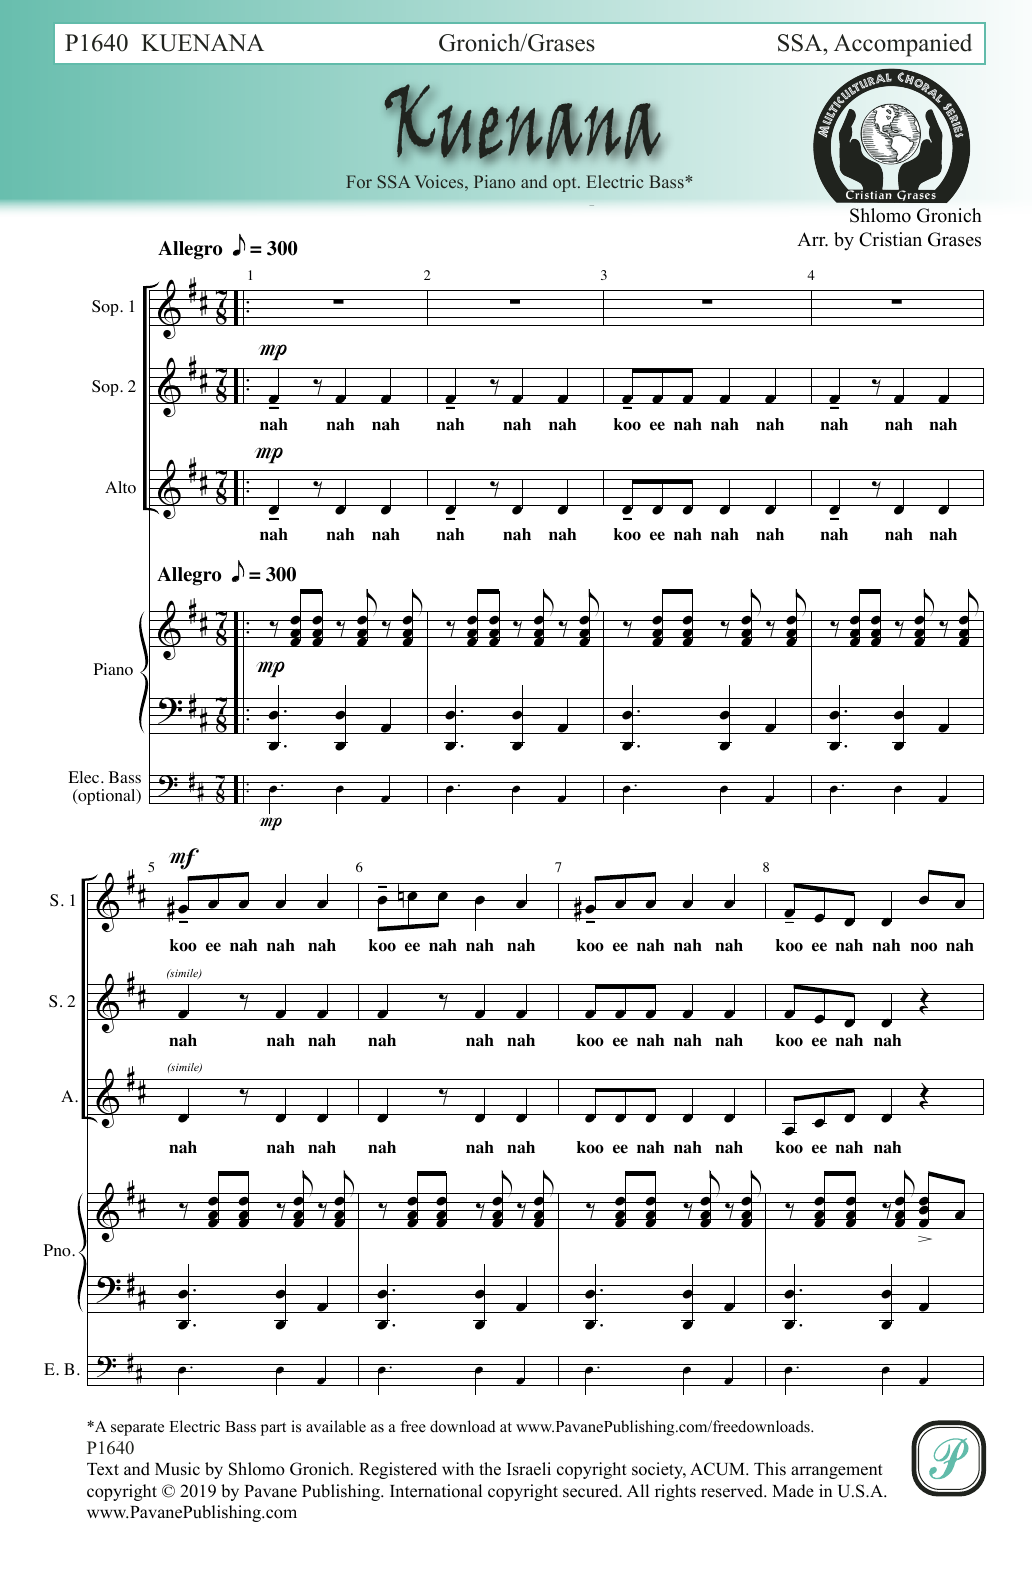 Shlomo Gronich Kuenana (arr. Cristian Grases) Sheet Music Notes & Chords for SSA Choir - Download or Print PDF